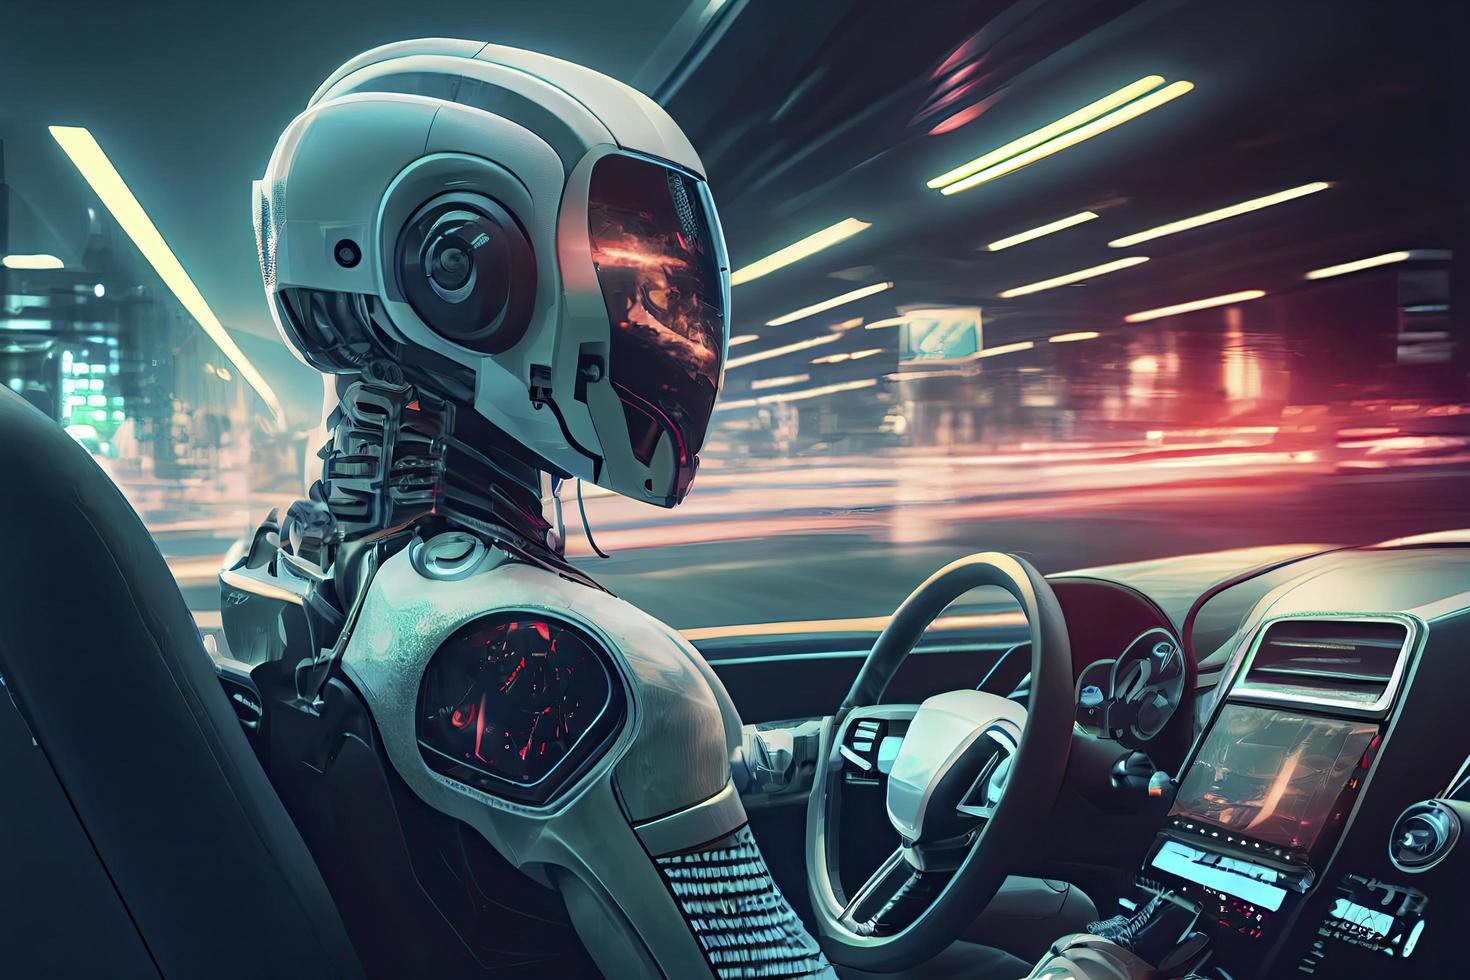 Humanoid Roboter Fahren autonom Auto, Zukunft Technologie Konzept foto